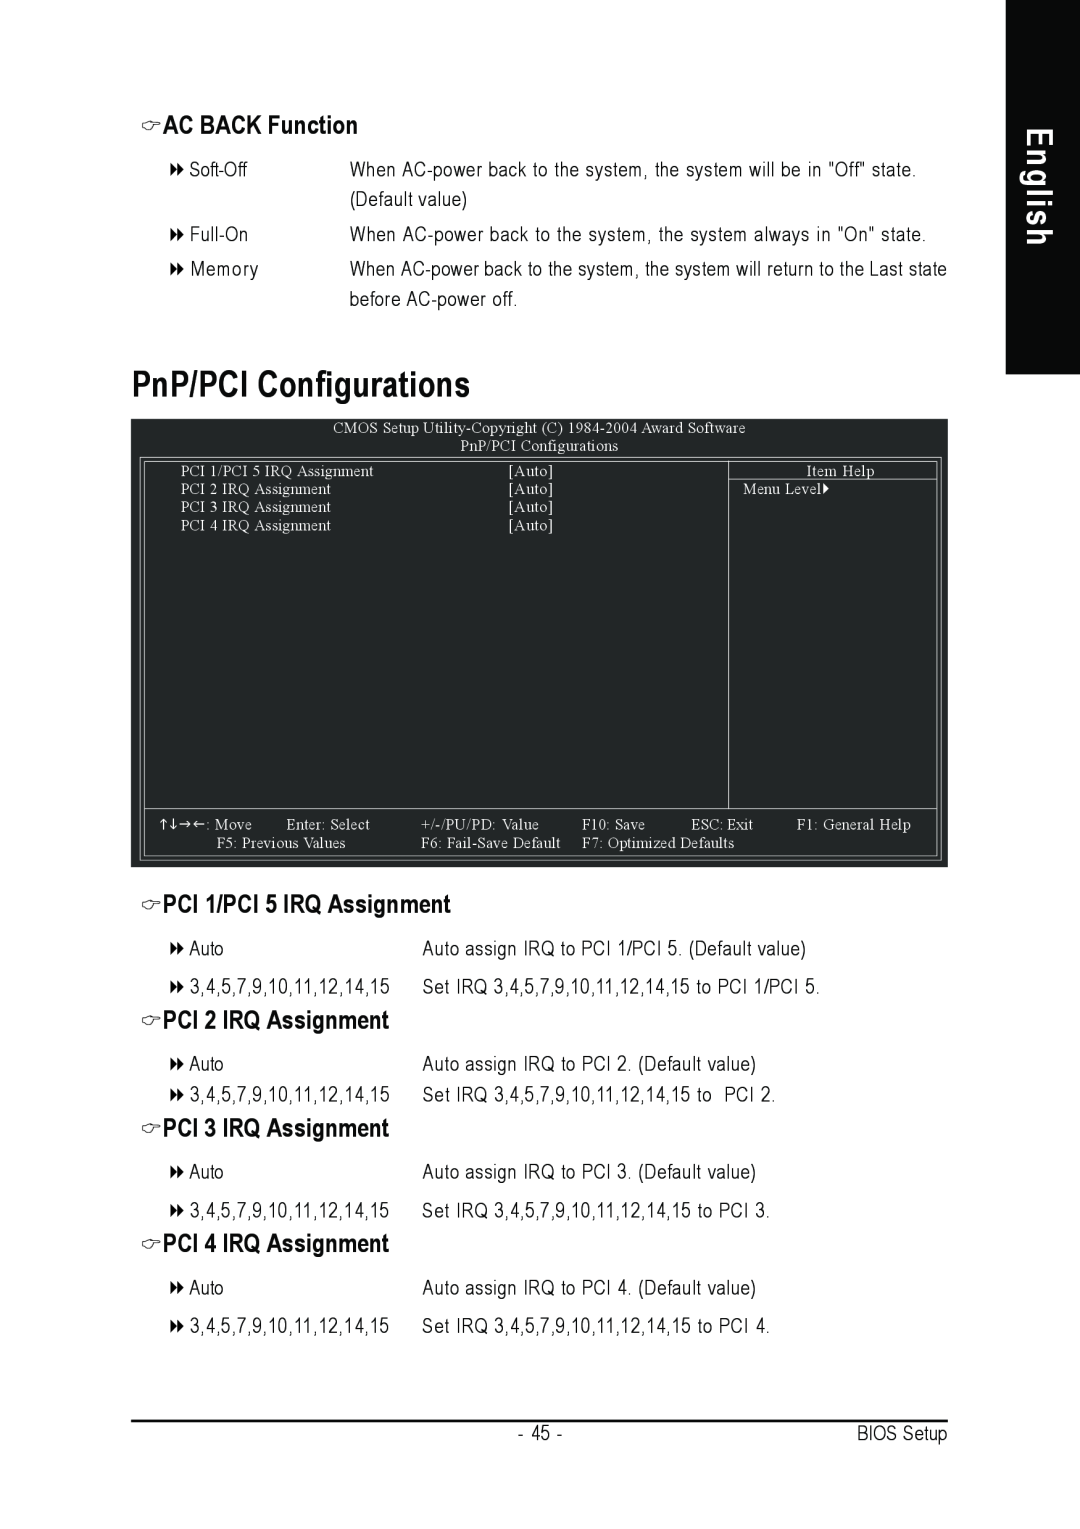 Gigabyte AGP 4X/8X PnP/PCI Configurations, English, AC BACK Function, PCI 1/PCI 5 IRQ Assignment, PCI 2 IRQ Assignment 